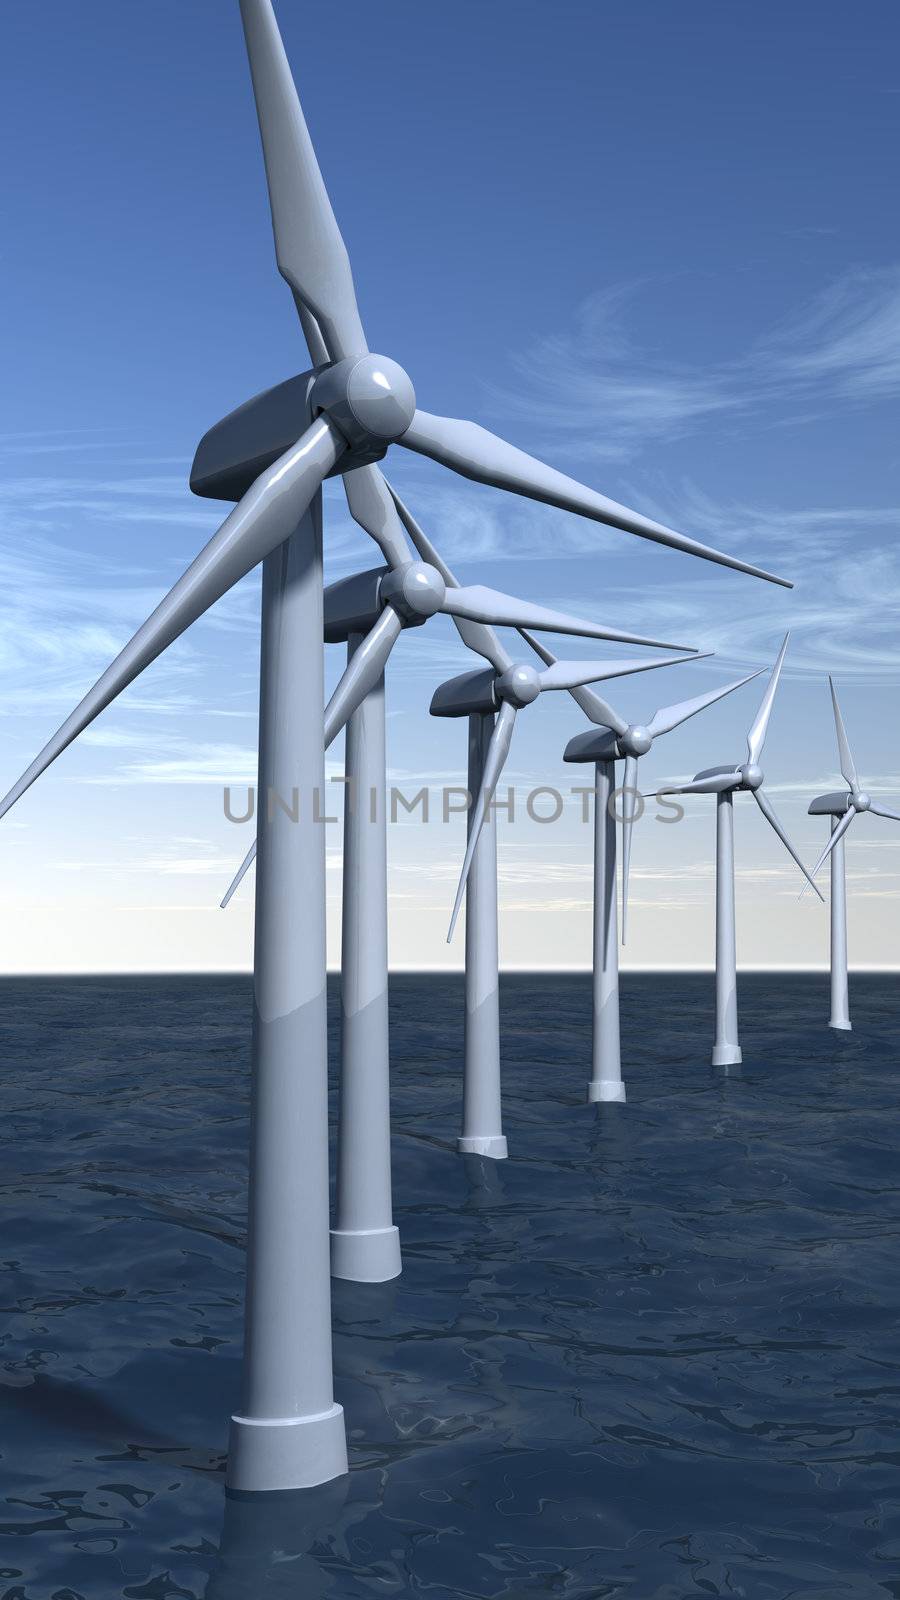 Offshore wind turbines in portrait by shkyo30